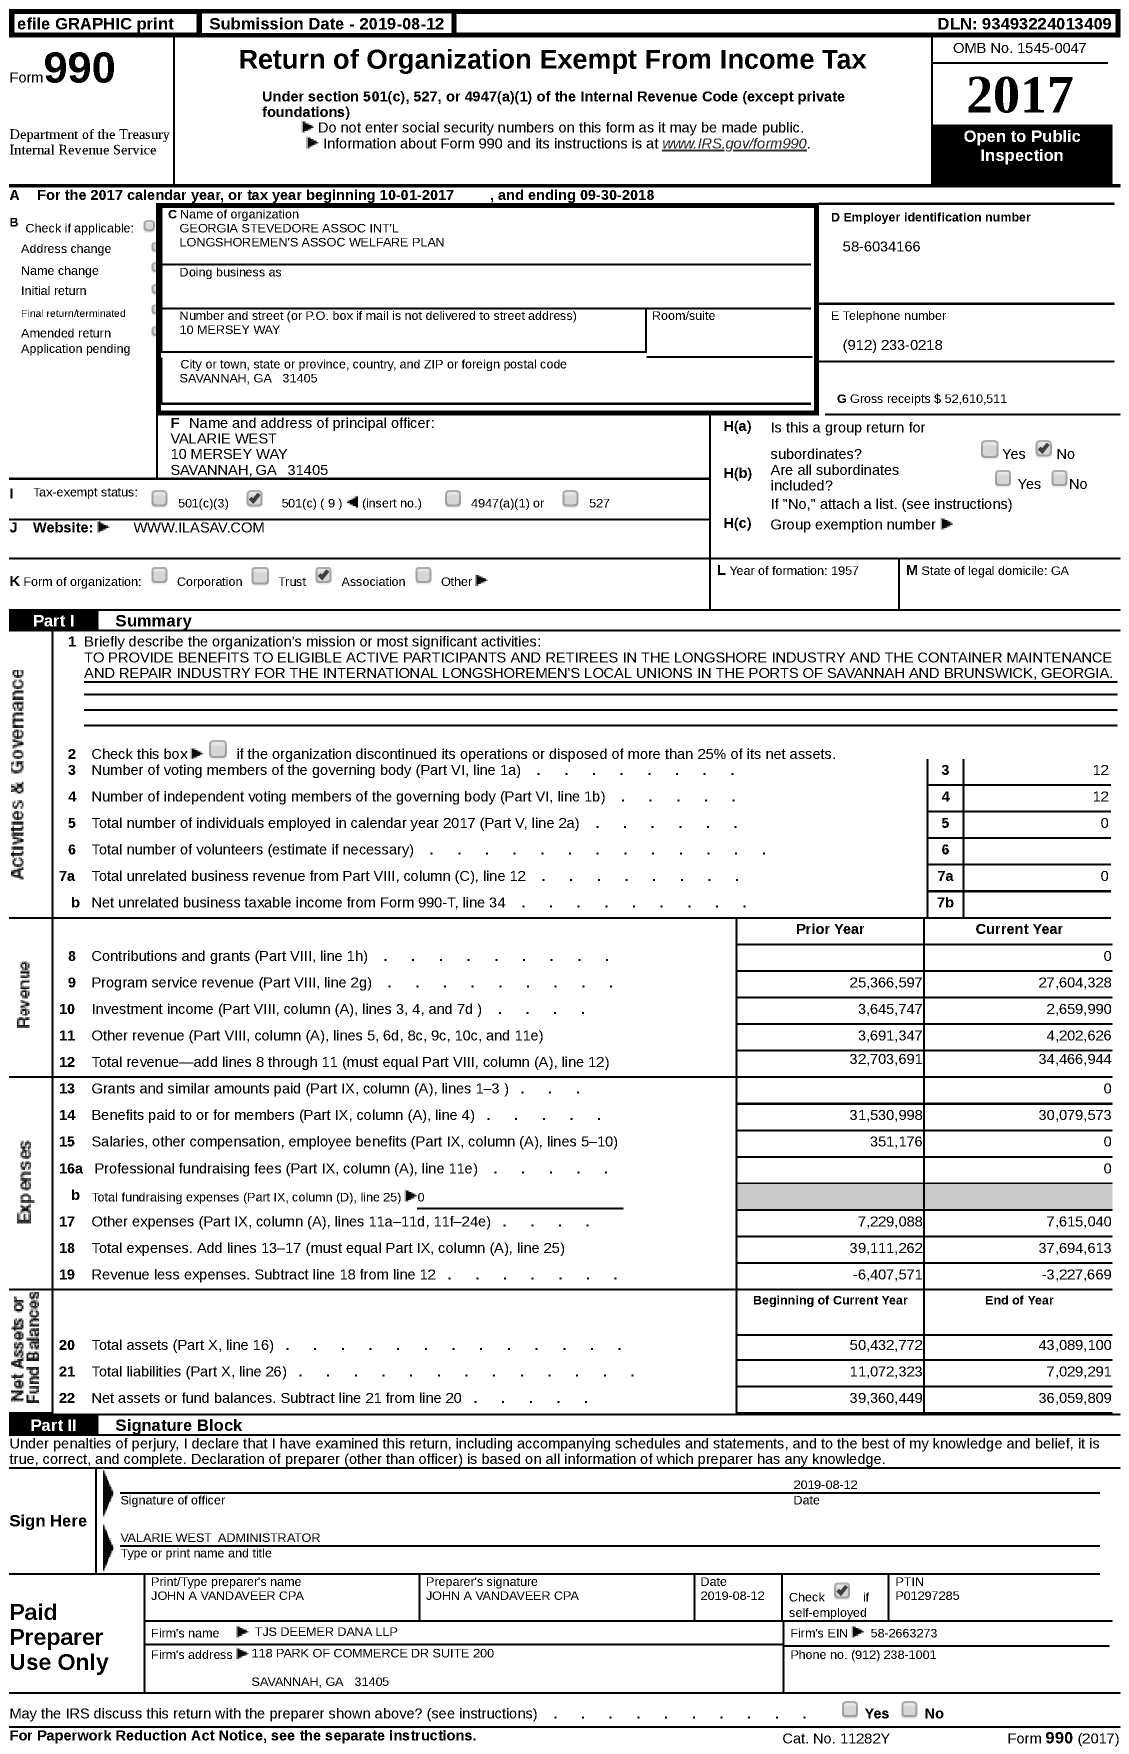 Image of first page of 2017 Form 990 for Georgia Stevedore Association International Longshoremen's Association Welfare Plan